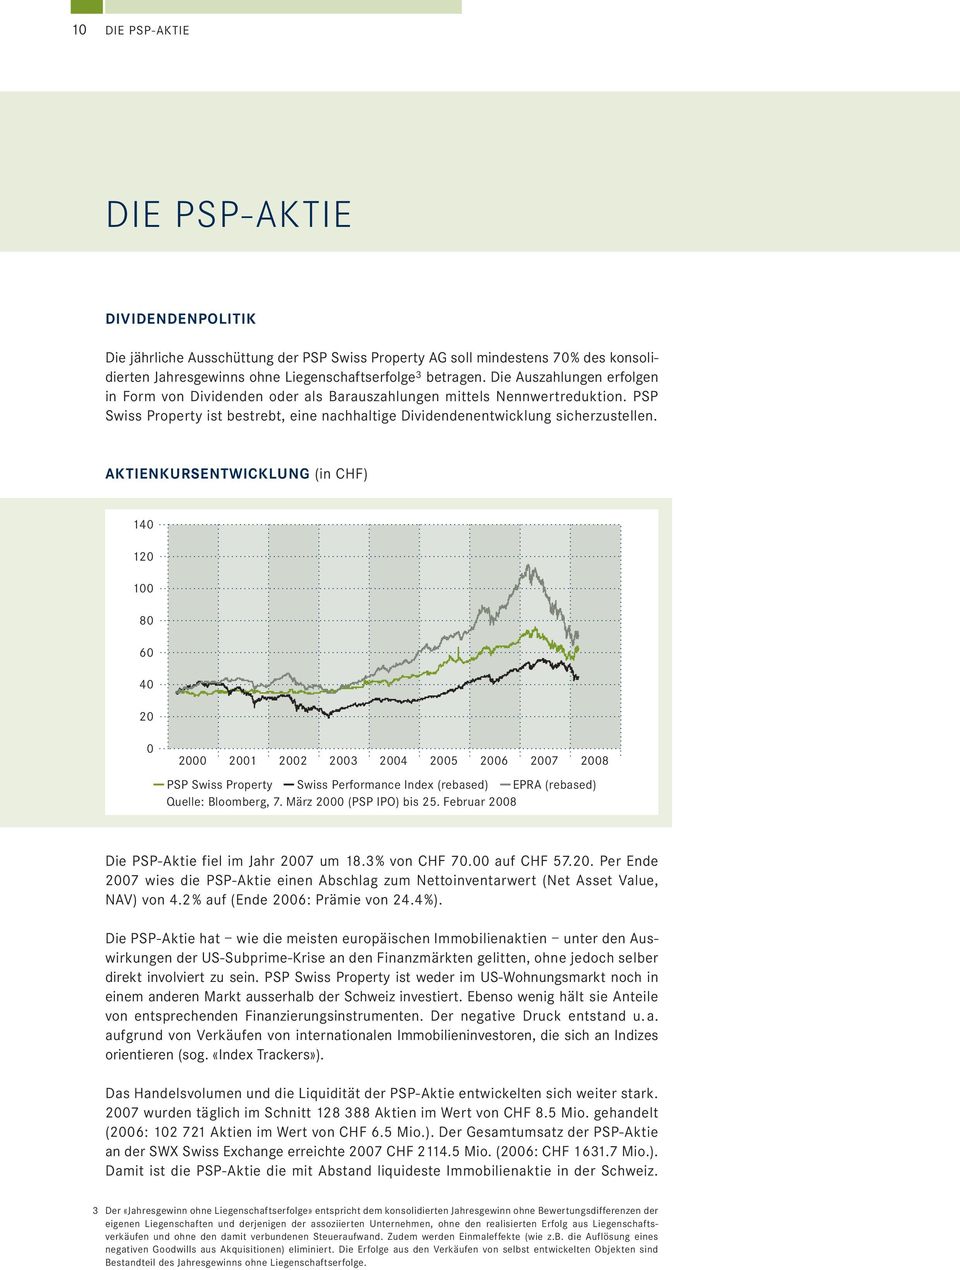 AKTIENKURSENTWICKLUNG (in CHF) 140 120 100 80 60 40 20 0 2000 2001 2002 2003 2004 2005 2006 2007 2008 PSP Swiss Property Swiss Performance Index (rebased) EPRA (rebased) Quelle: Bloomberg, 7.